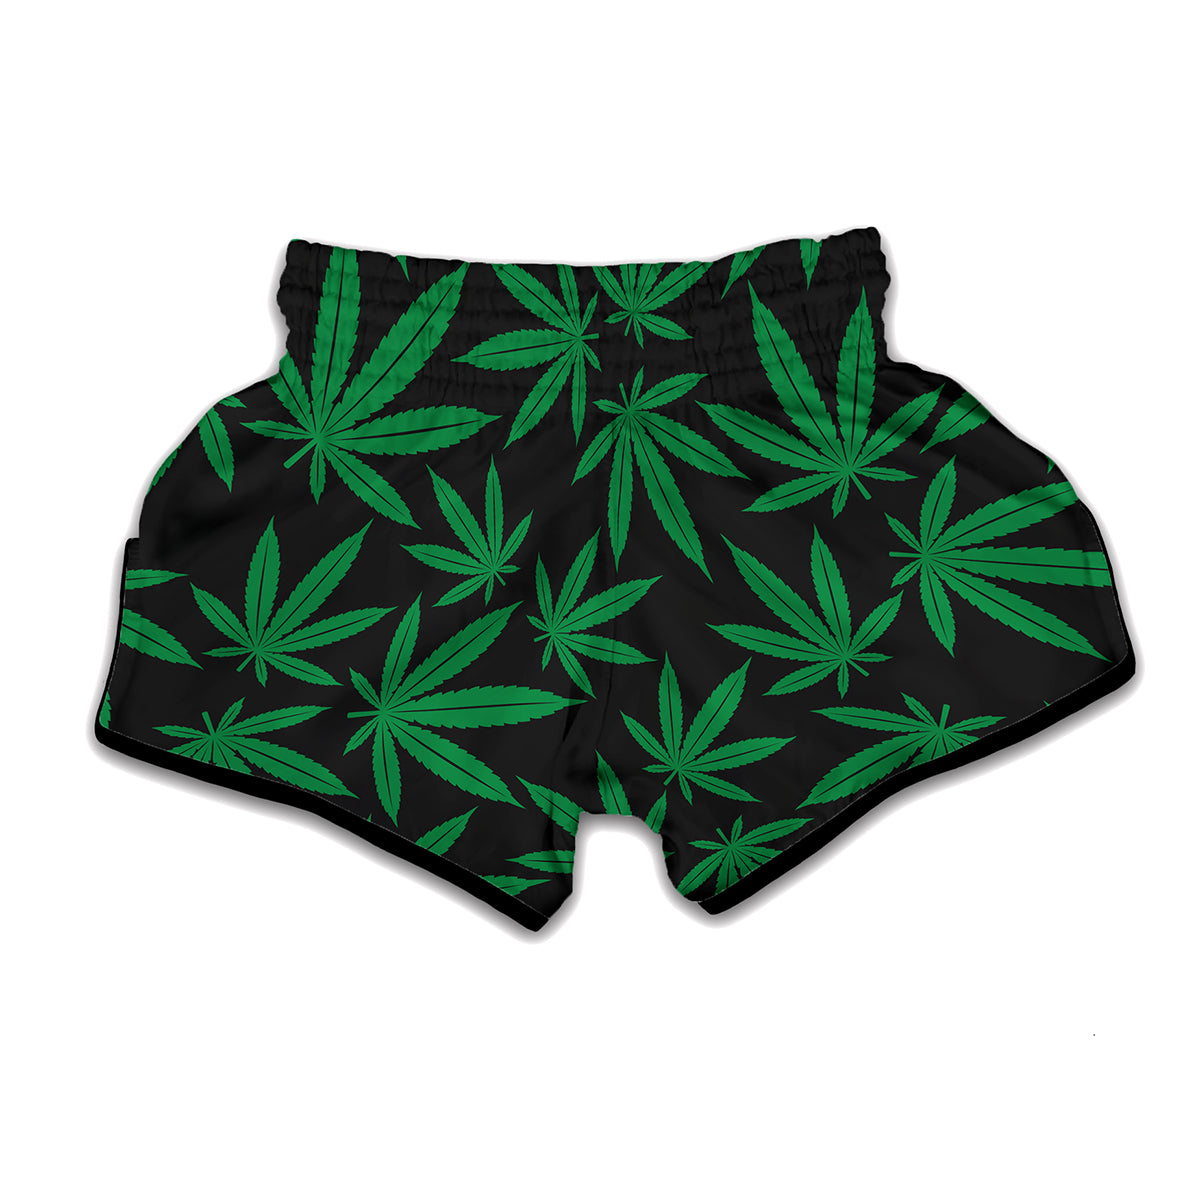 Green And Black Cannabis Leaf Print Muay Thai Boxing Shorts